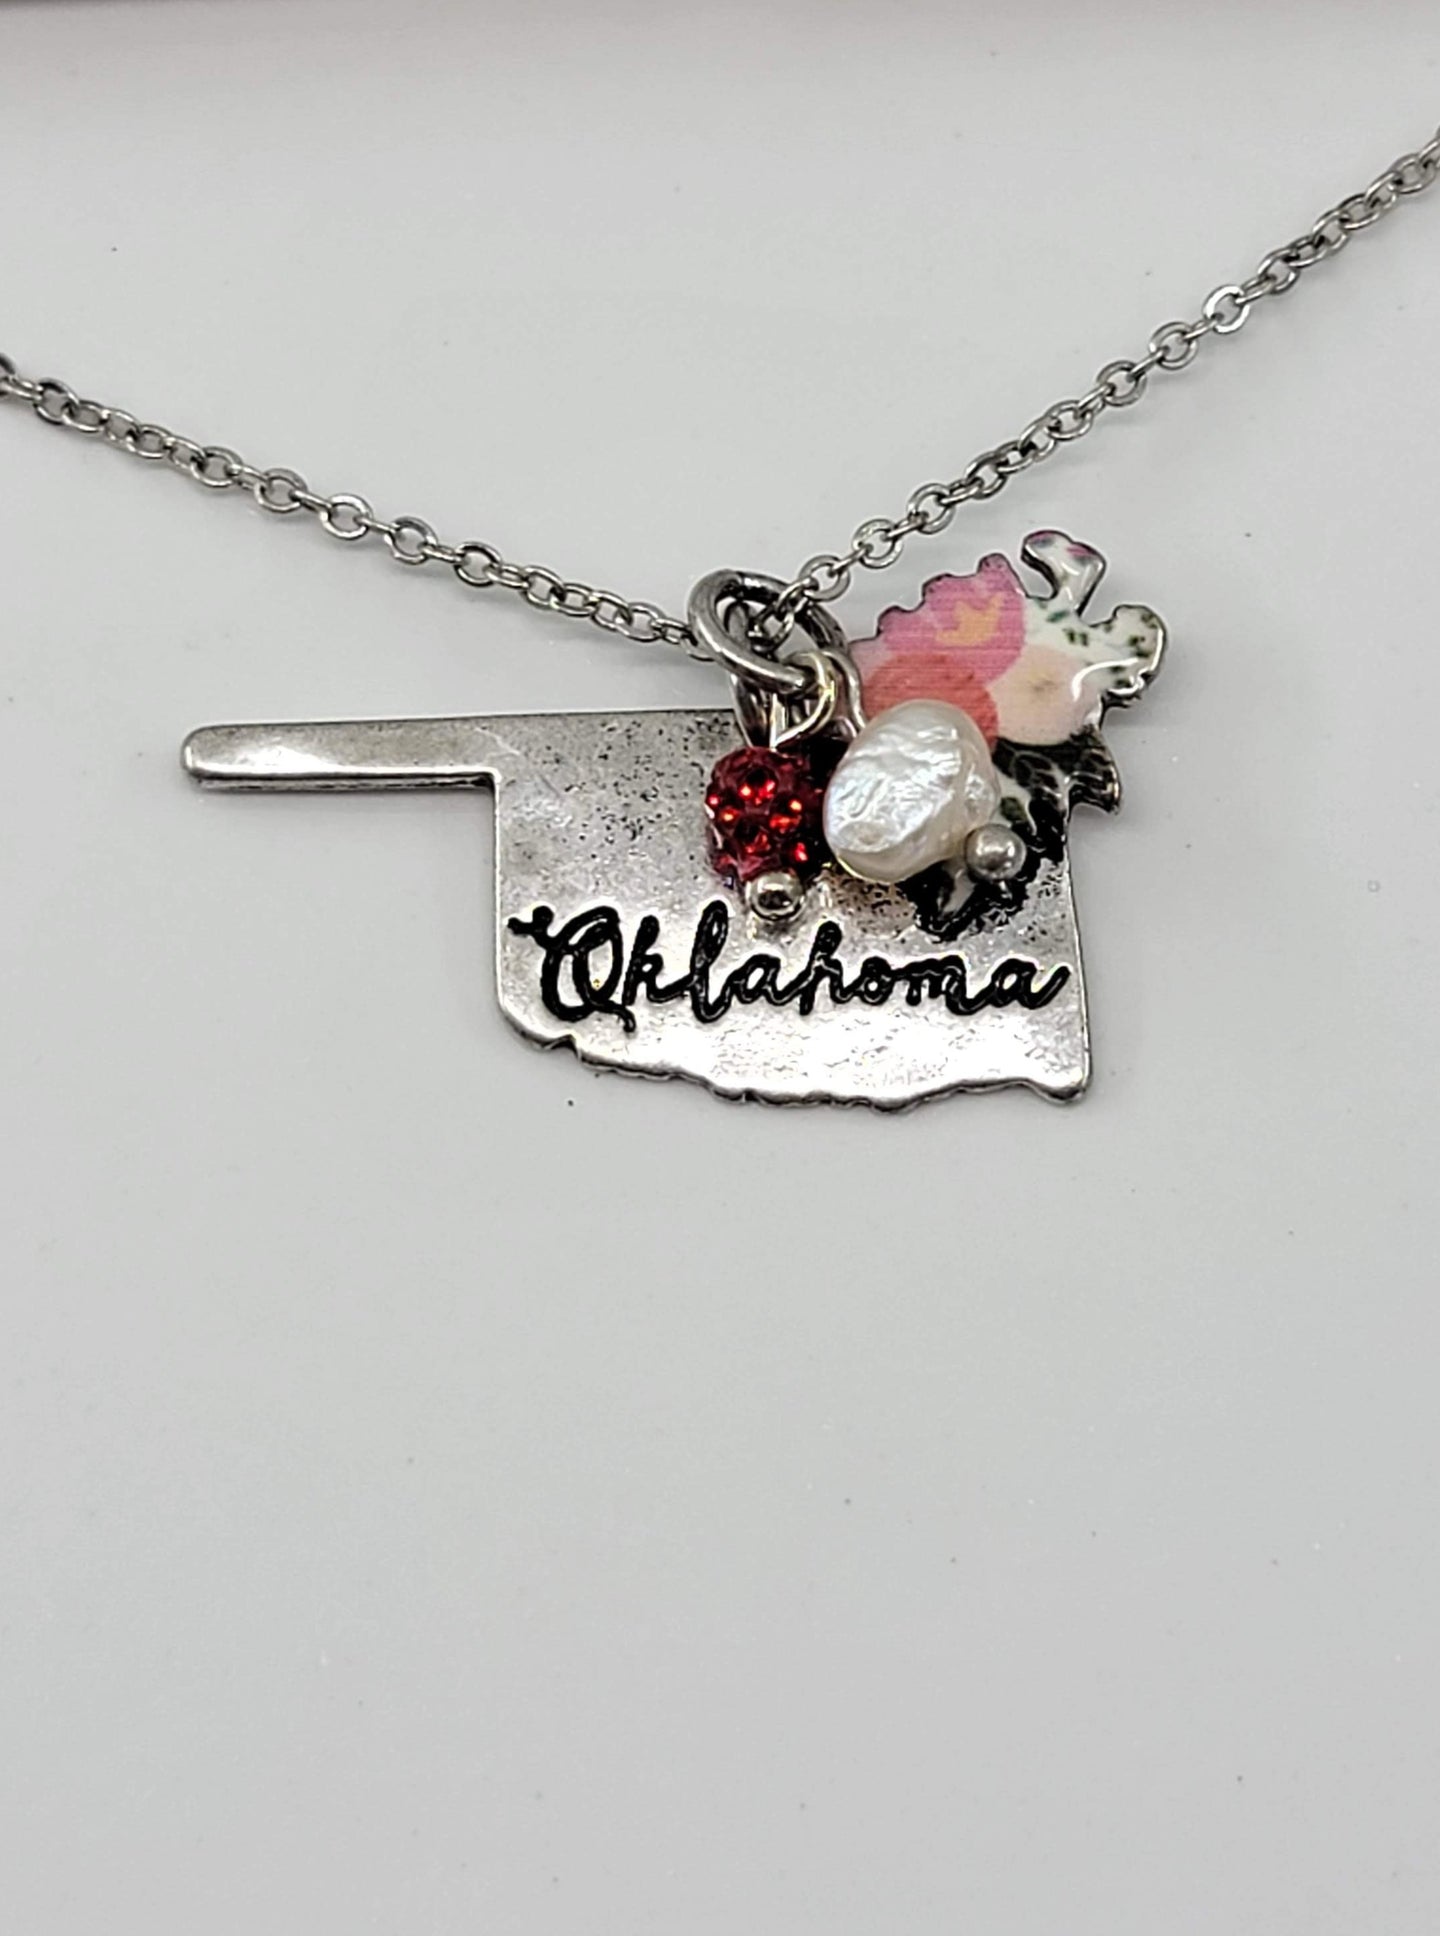 Oklahoma Flower Pendant Necklace - Silver